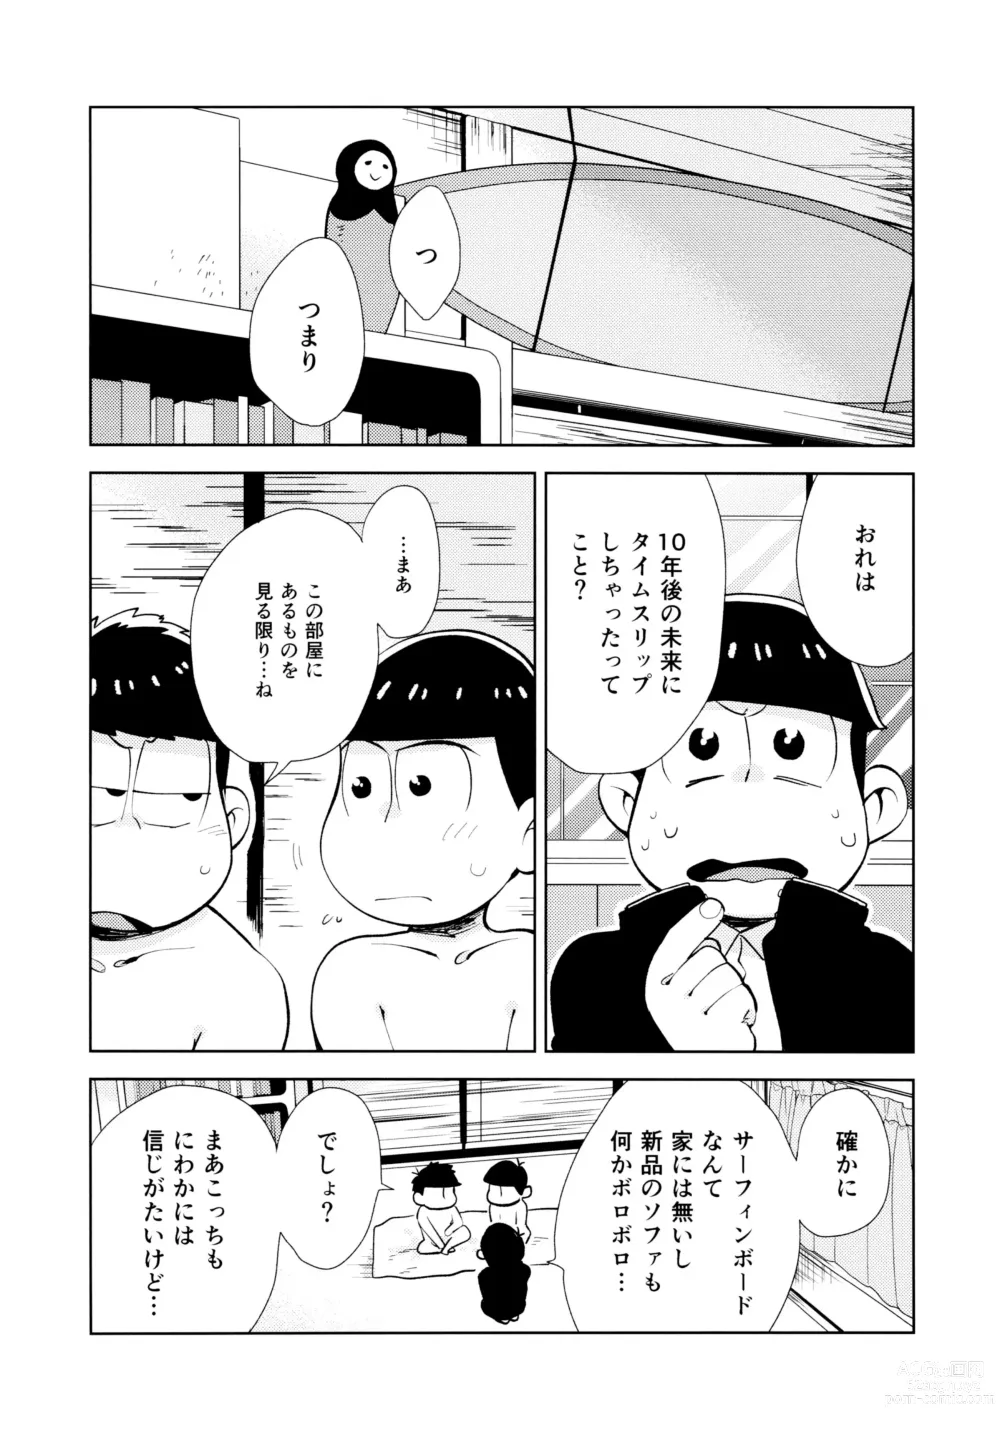 Page 11 of doujinshi Chotto Abunai Time Slip